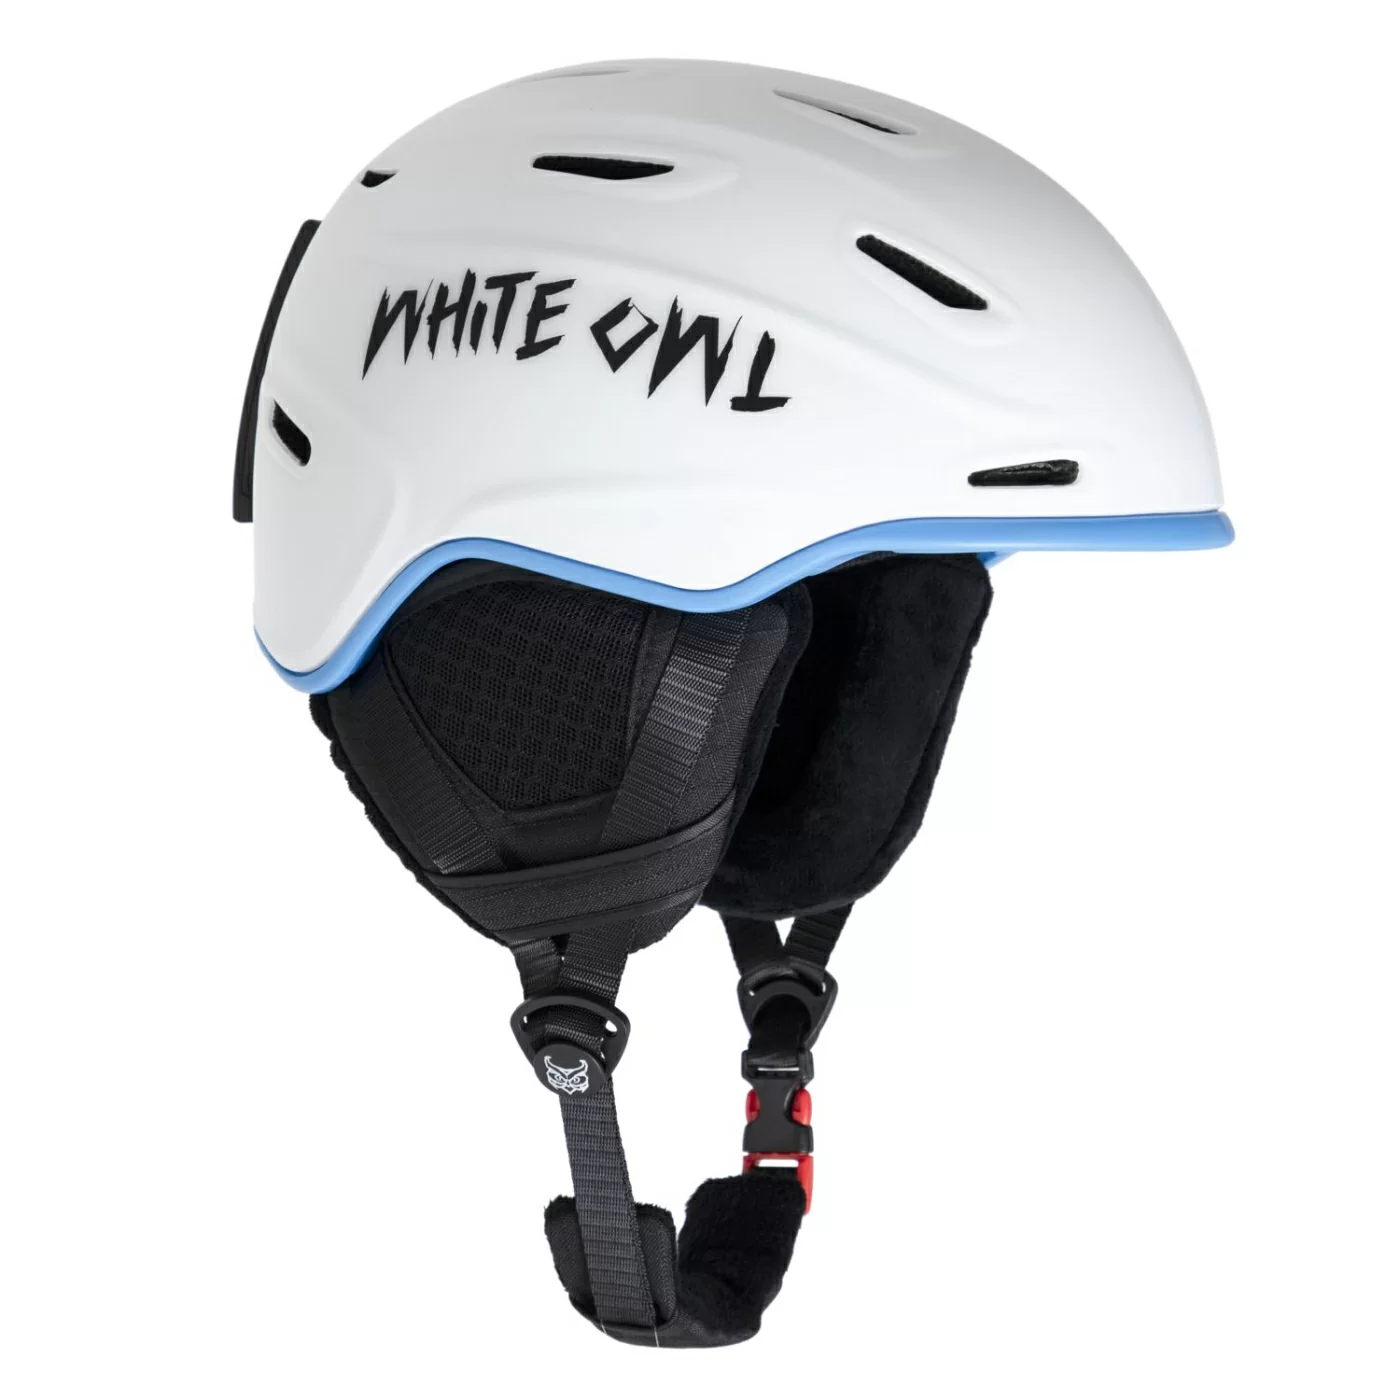 Реальное фото Шлем White Owl HK004 зимний 54-58см белый с синим  W112792 от магазина СпортСЕ